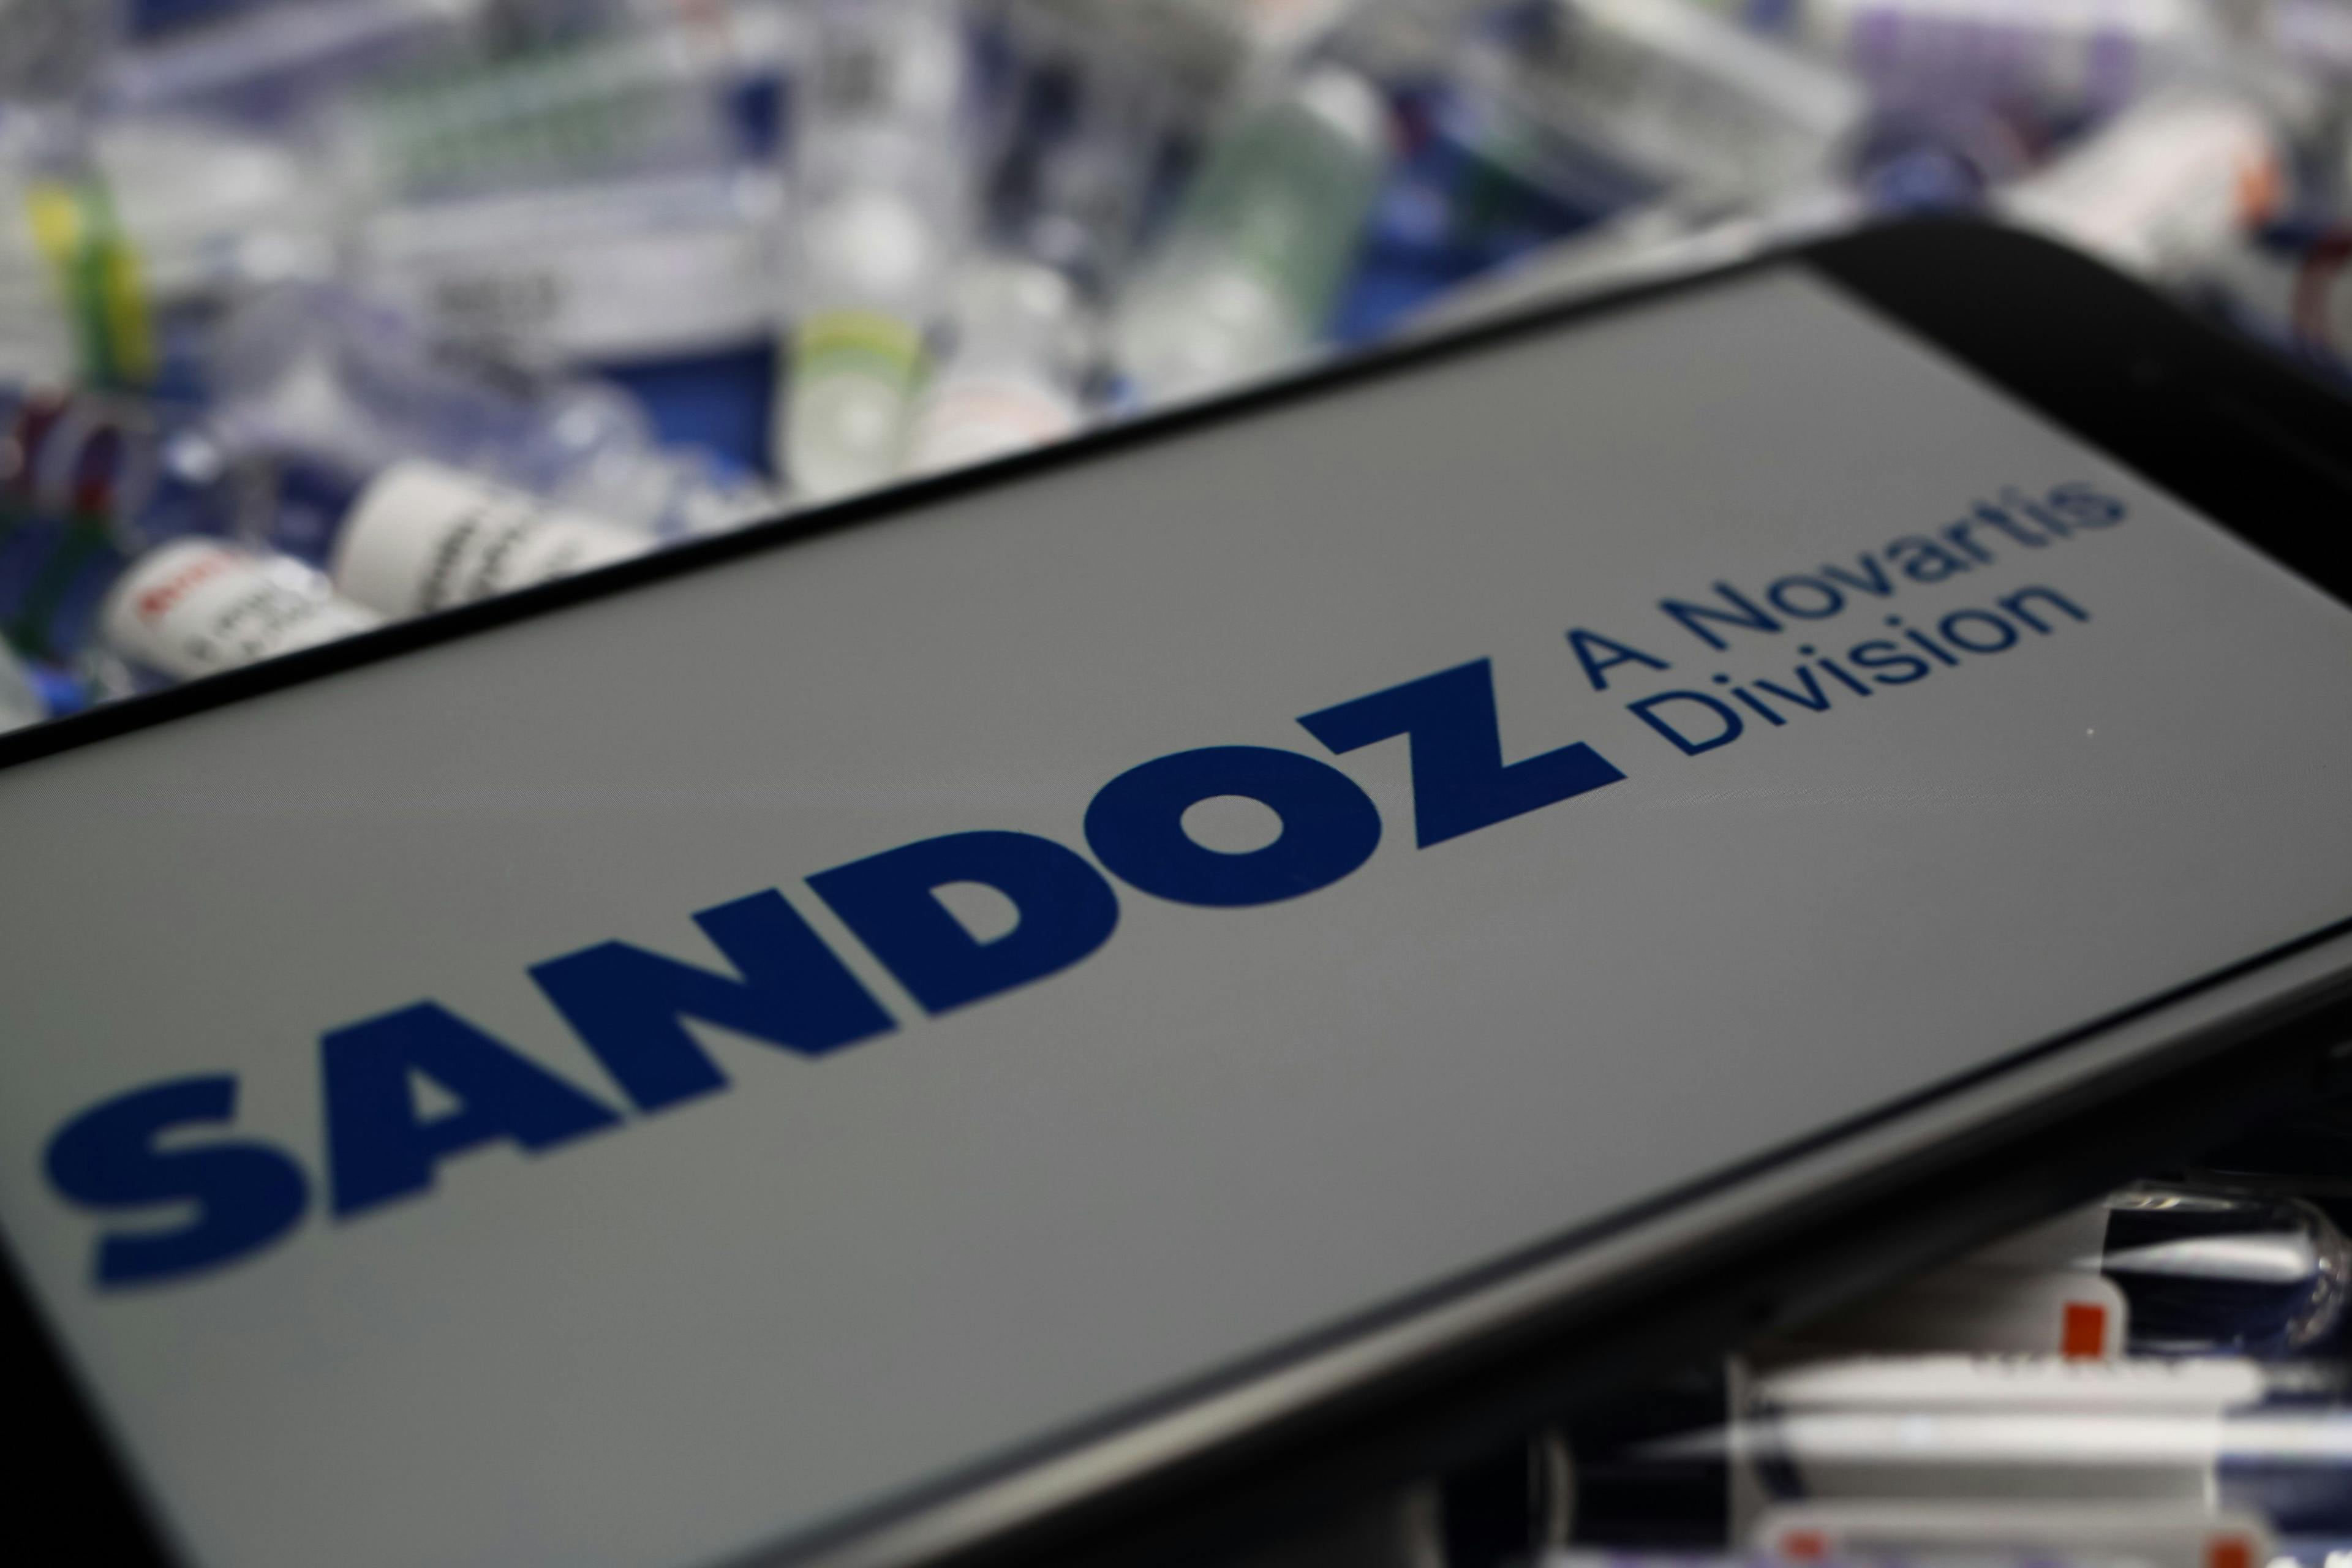 Sandoz Launches Action Plan to Increase Global Biosimilar Access